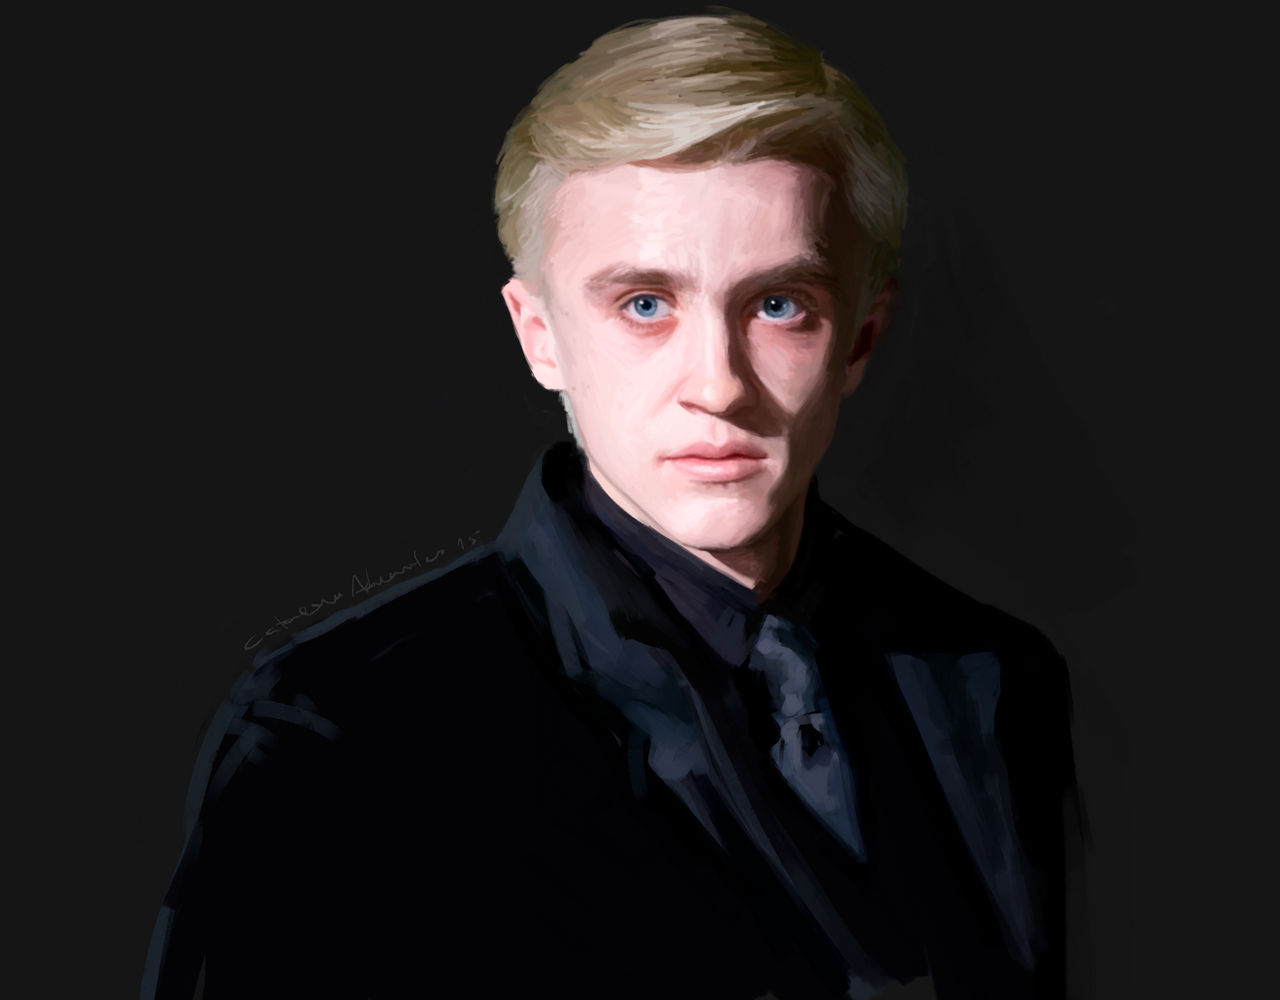 Draco Malfoy by funsizedcat on DeviantArt